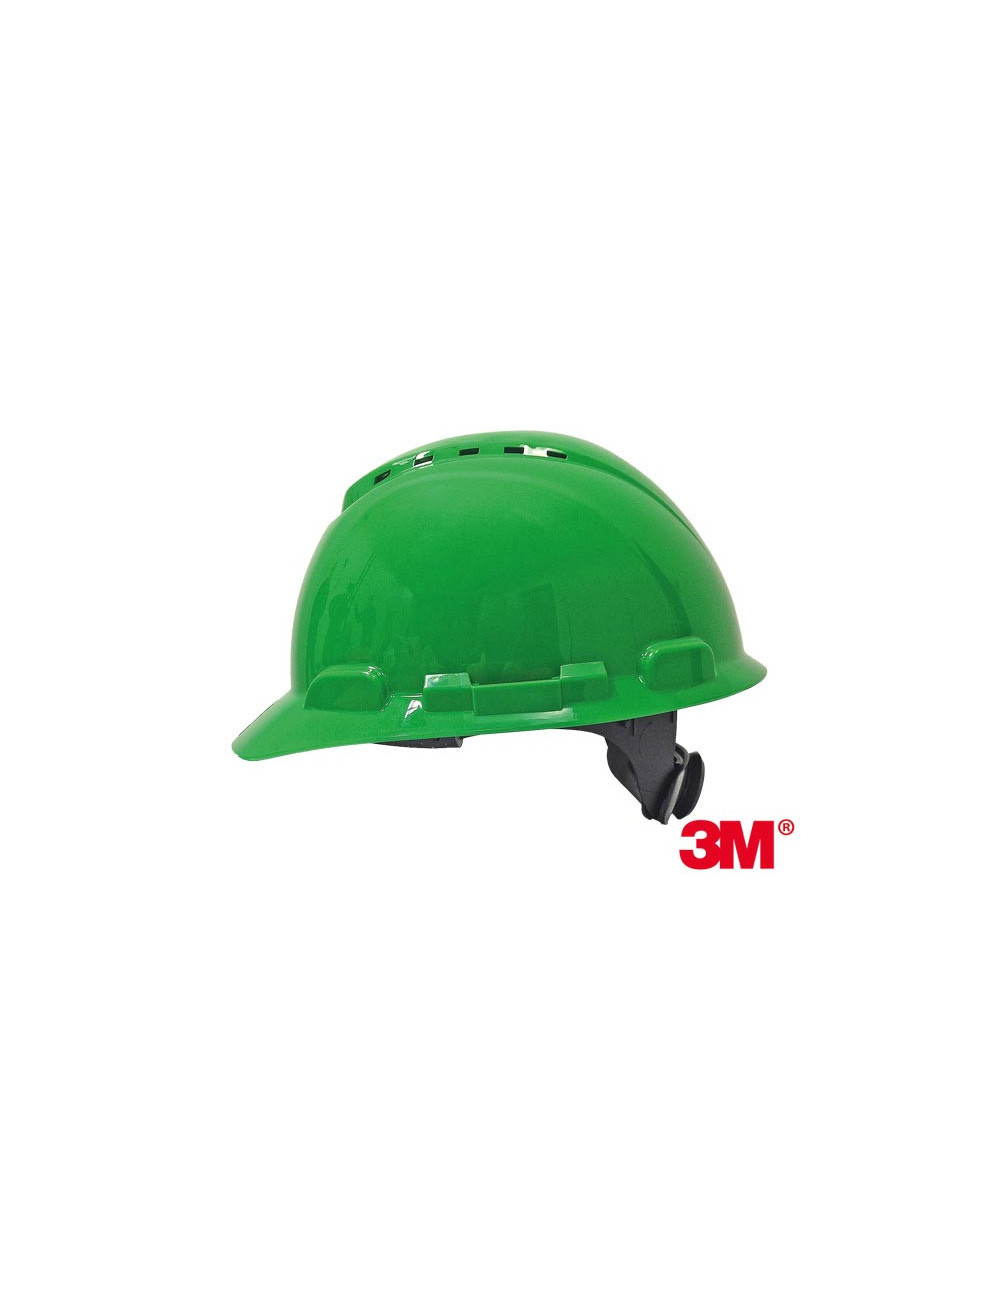 Schutzhelm grün 3M 3m-kas-h700n